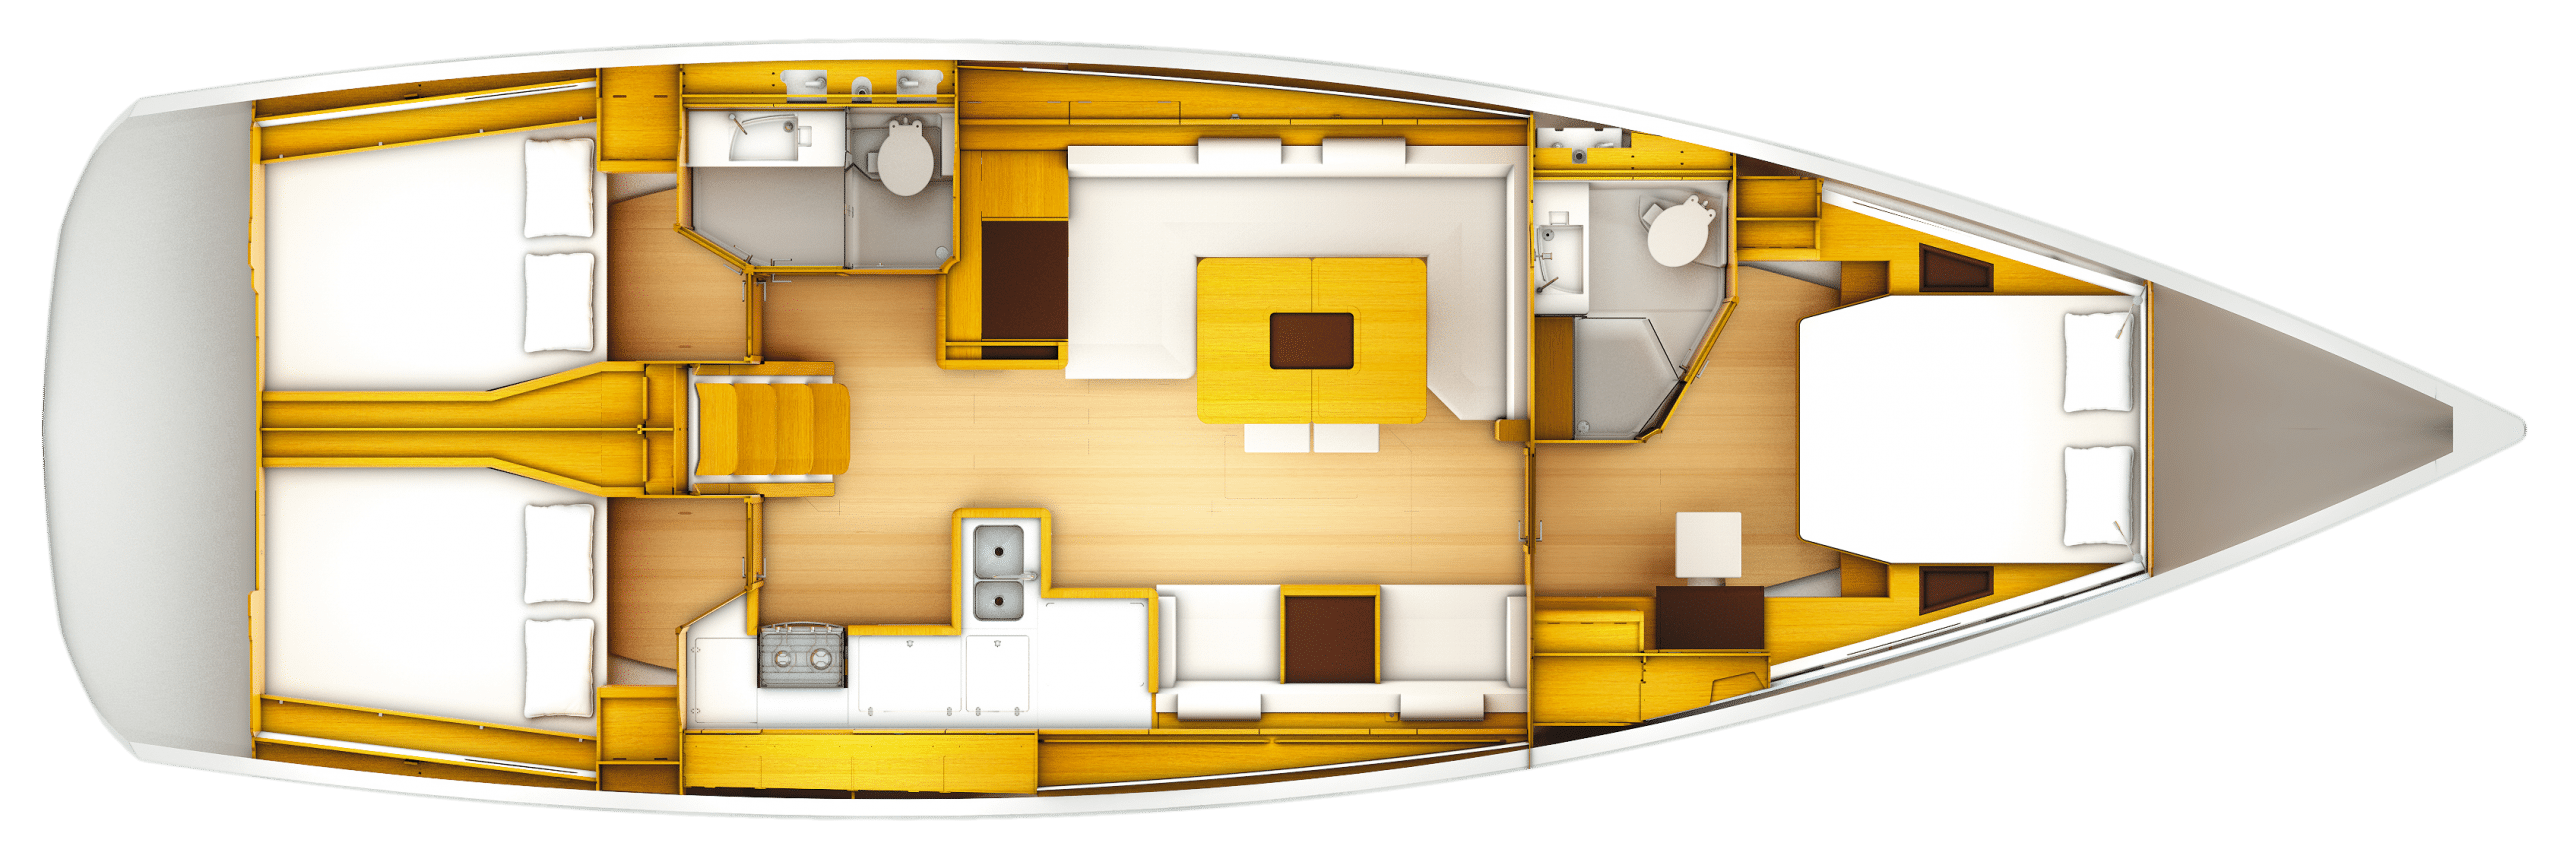 jeanneau-sun-odyssey-509-layout-3-cabins-2-heads